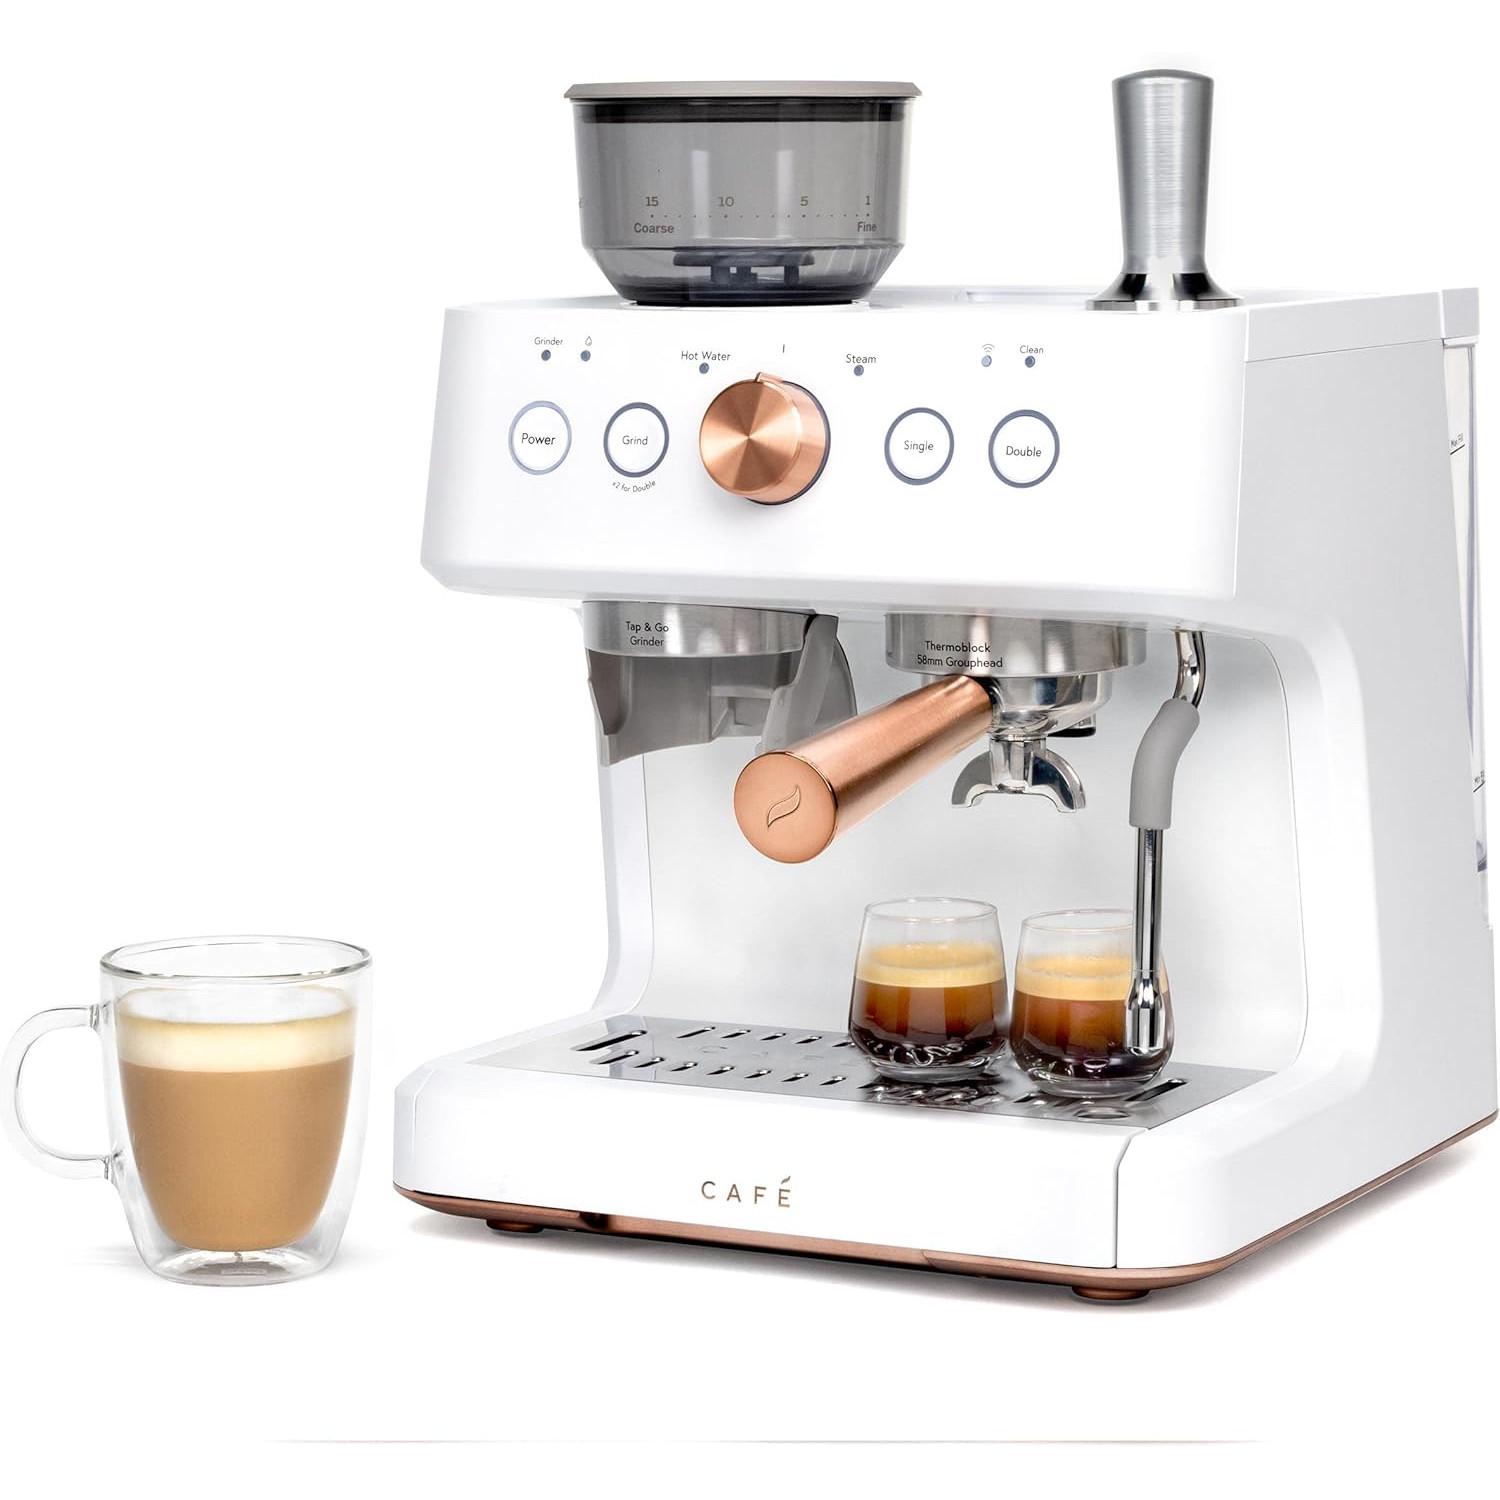 Cafe Bellissimo Semi Automatic Espresso Machine for $149 Shipped